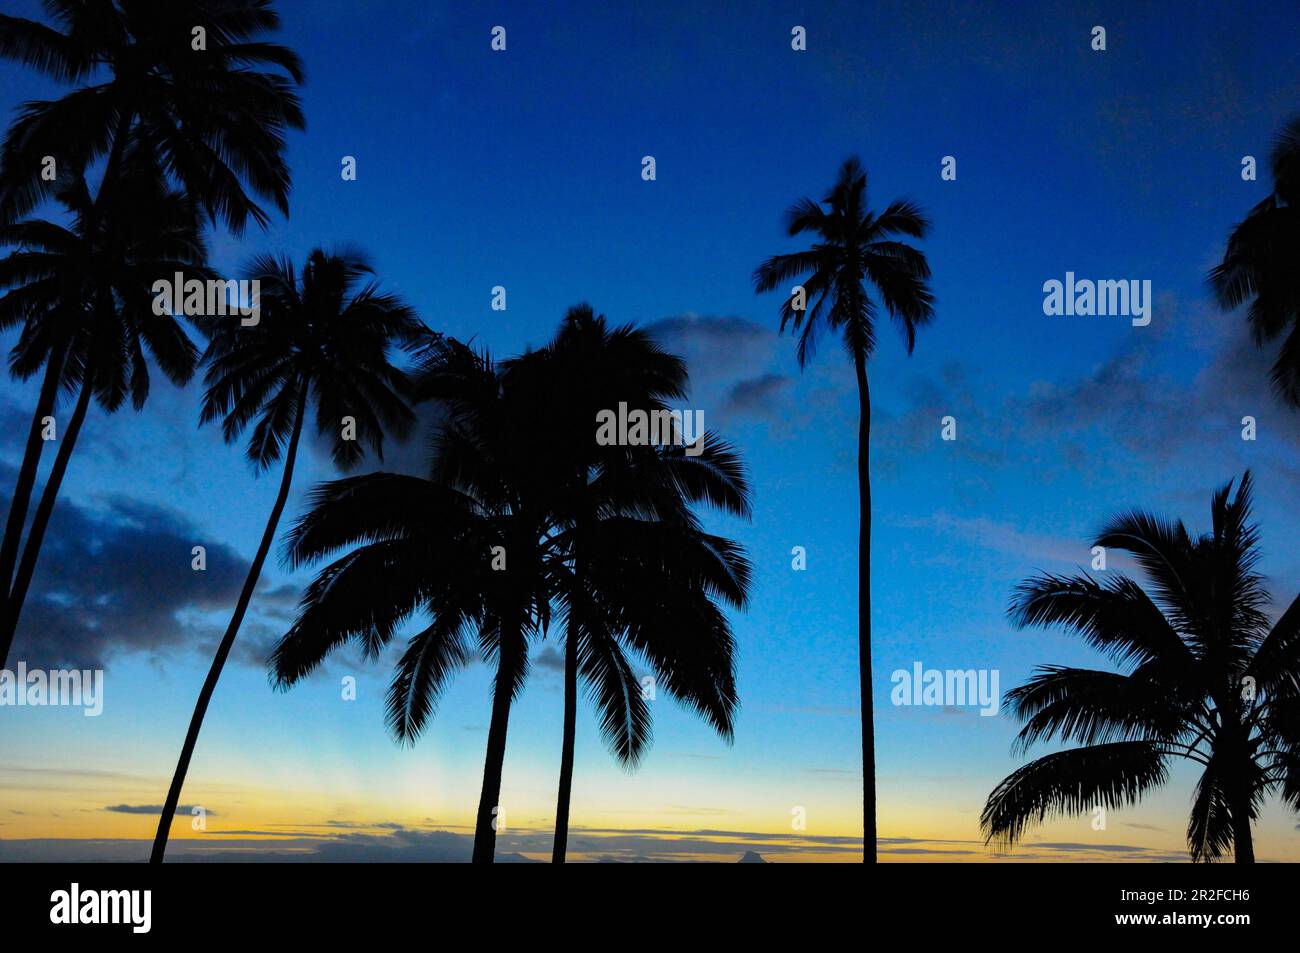 Late dusk with a view of palm trees and the tropical sky, Savusavu, Fiji ISlands Stock Photo